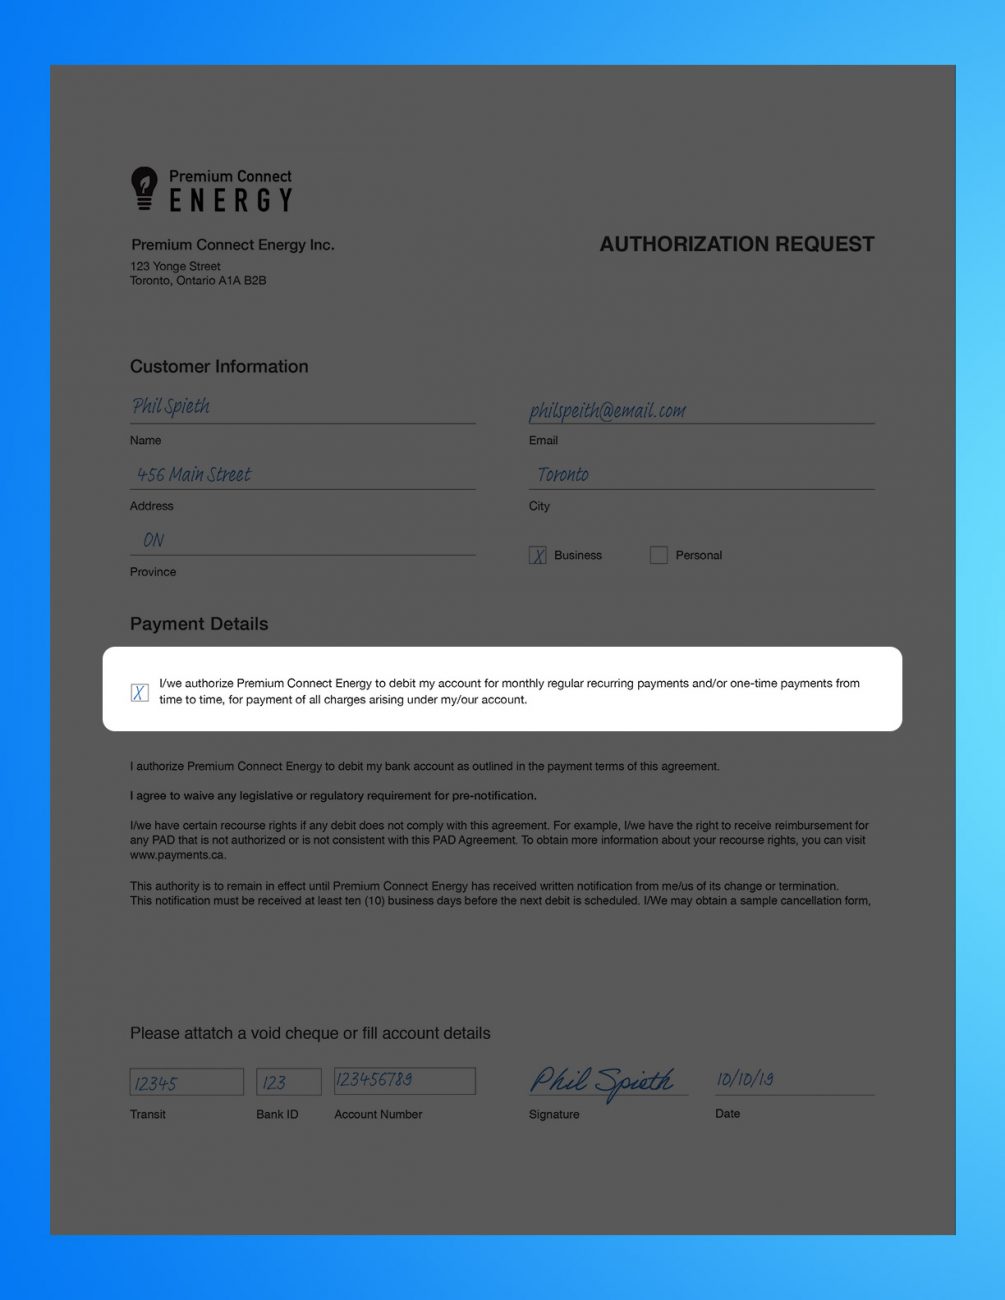 Pre authorized debit form example 3